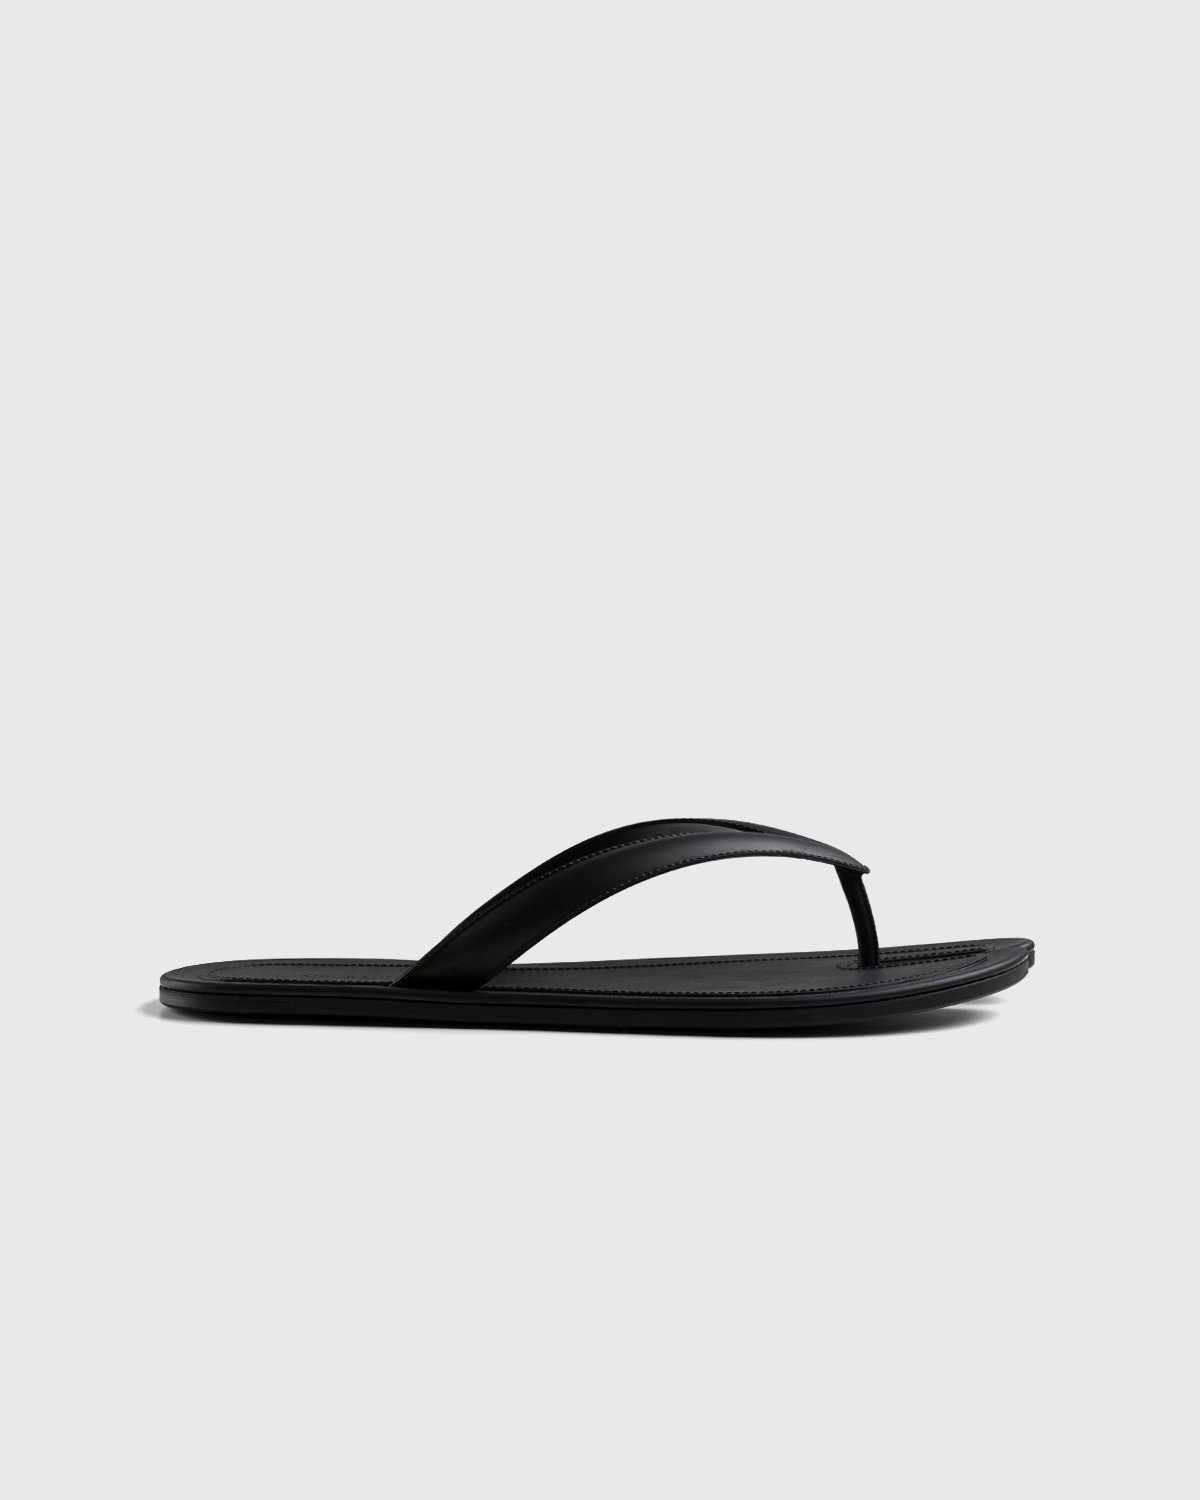 Maison Margiela - Tabi Flip-Flops Black - Footwear - Black - Image 2